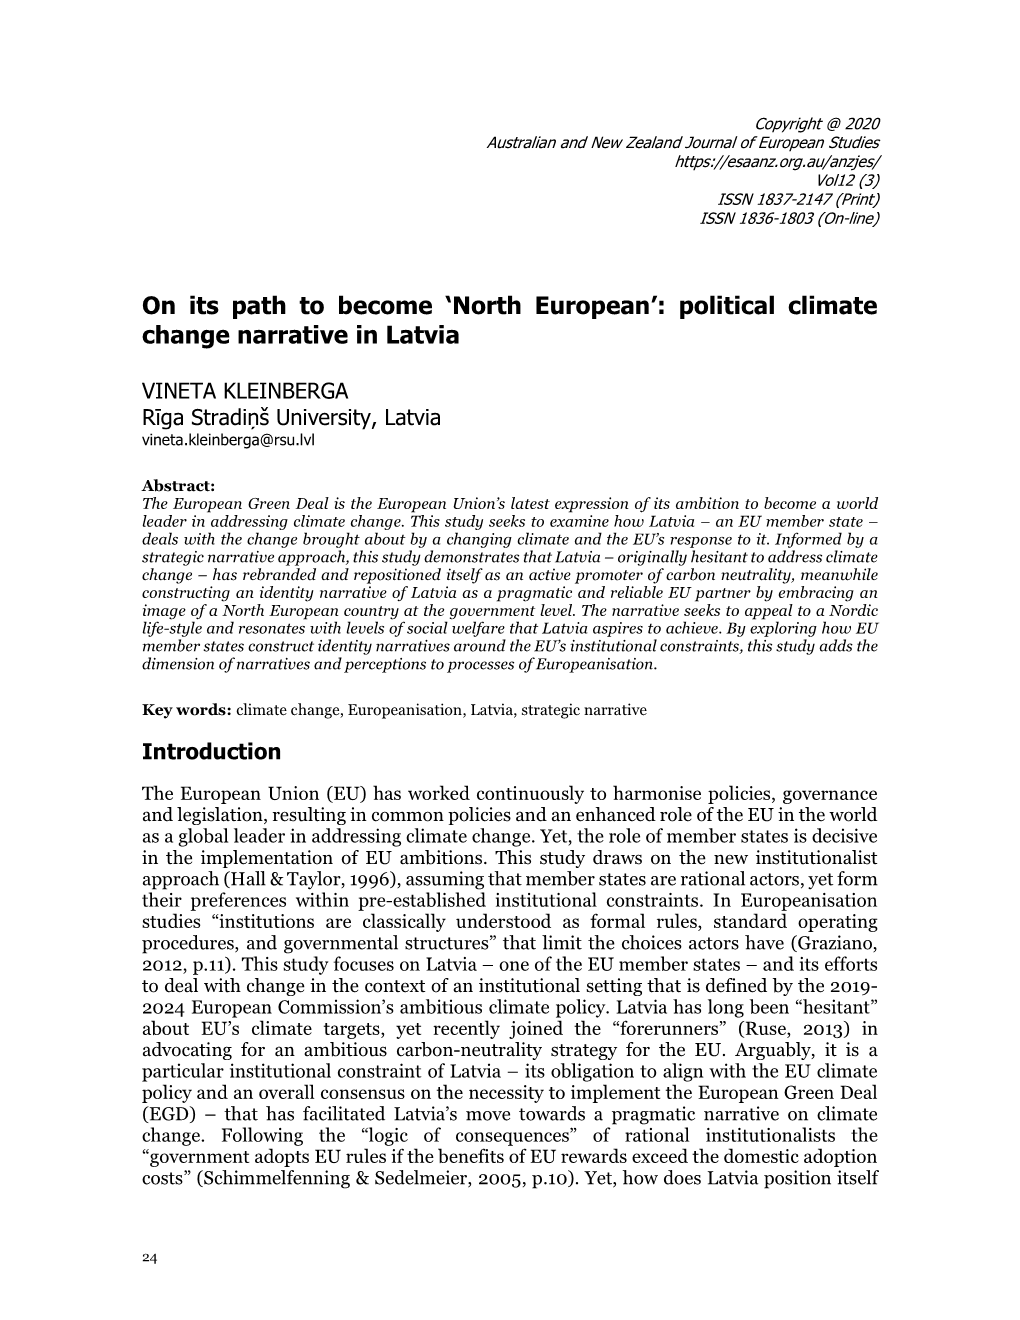 'North European': Political Climate Change Narrative in Latvia